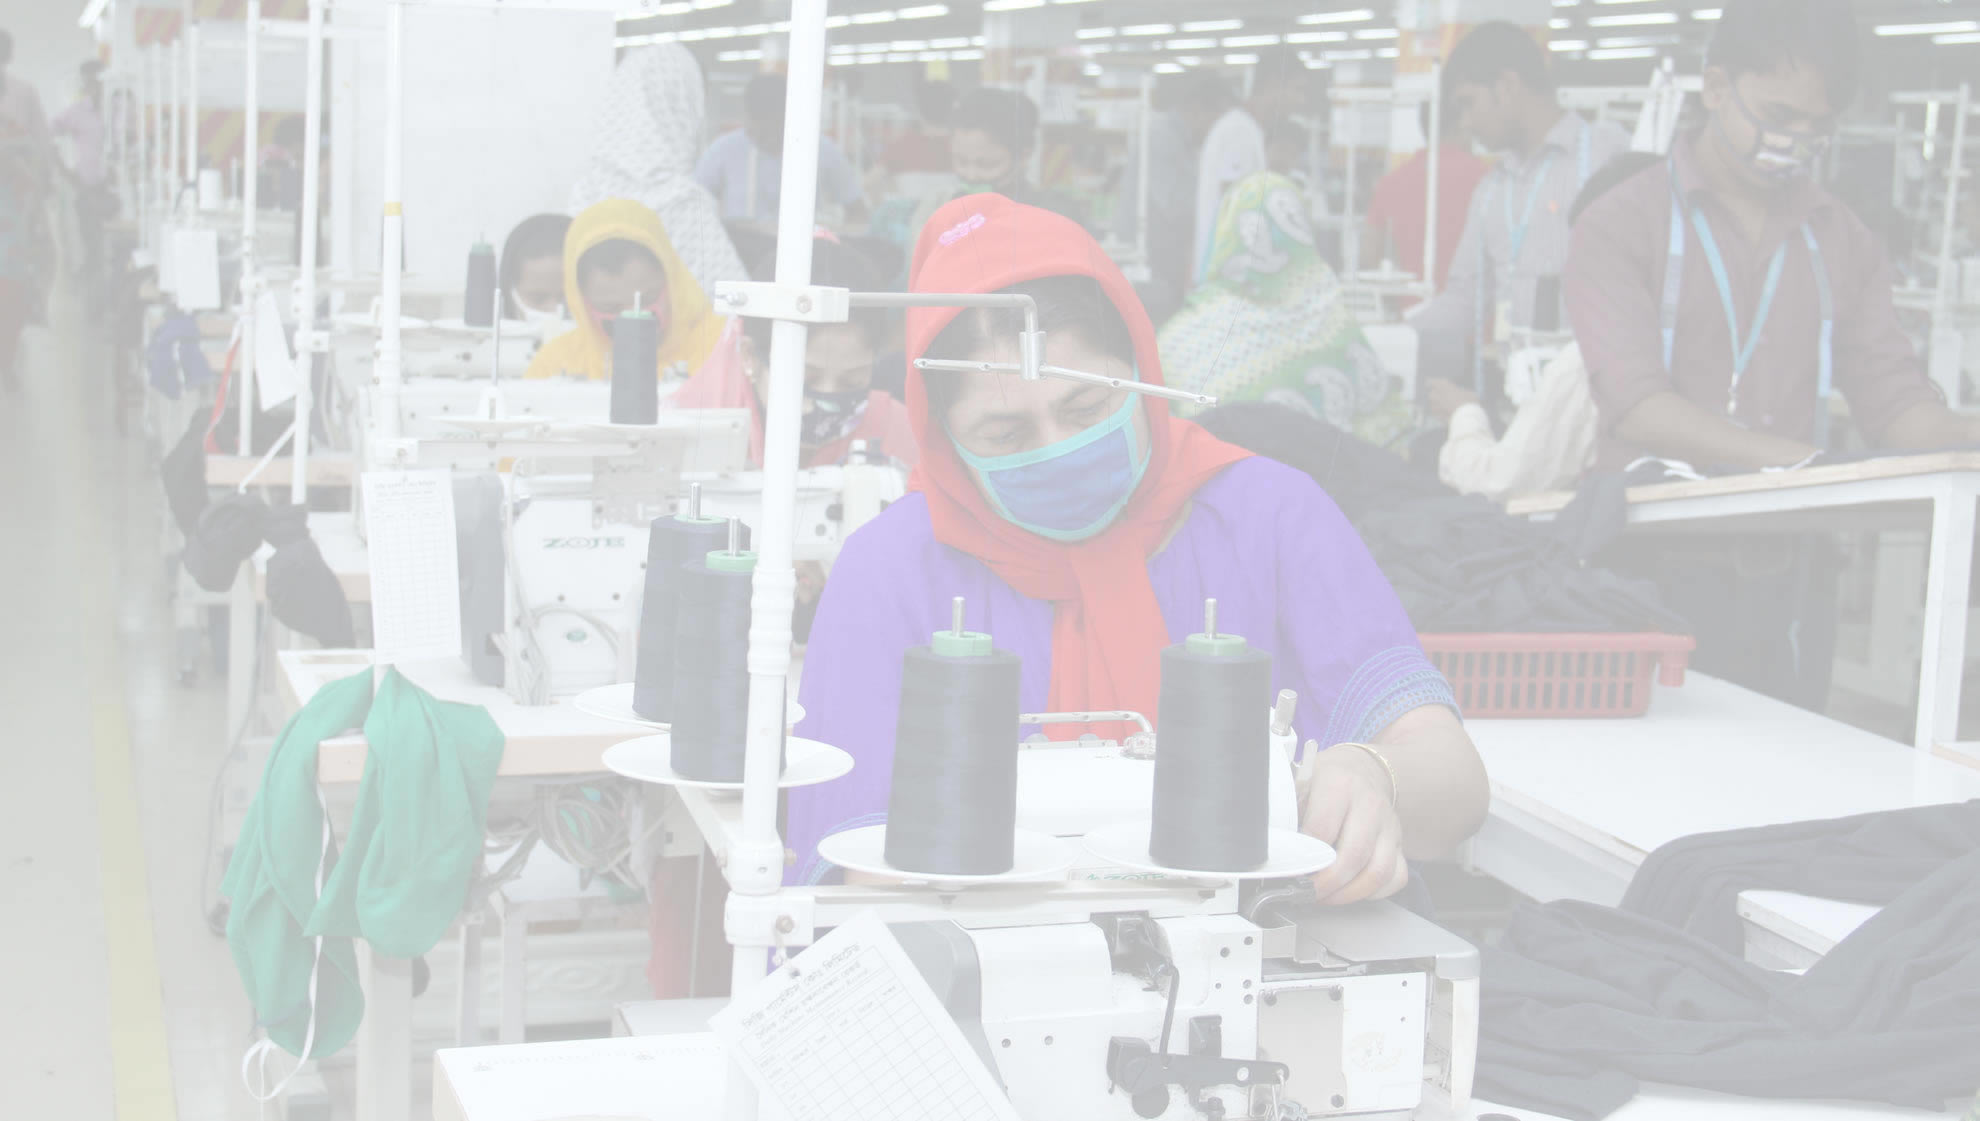 garments factory